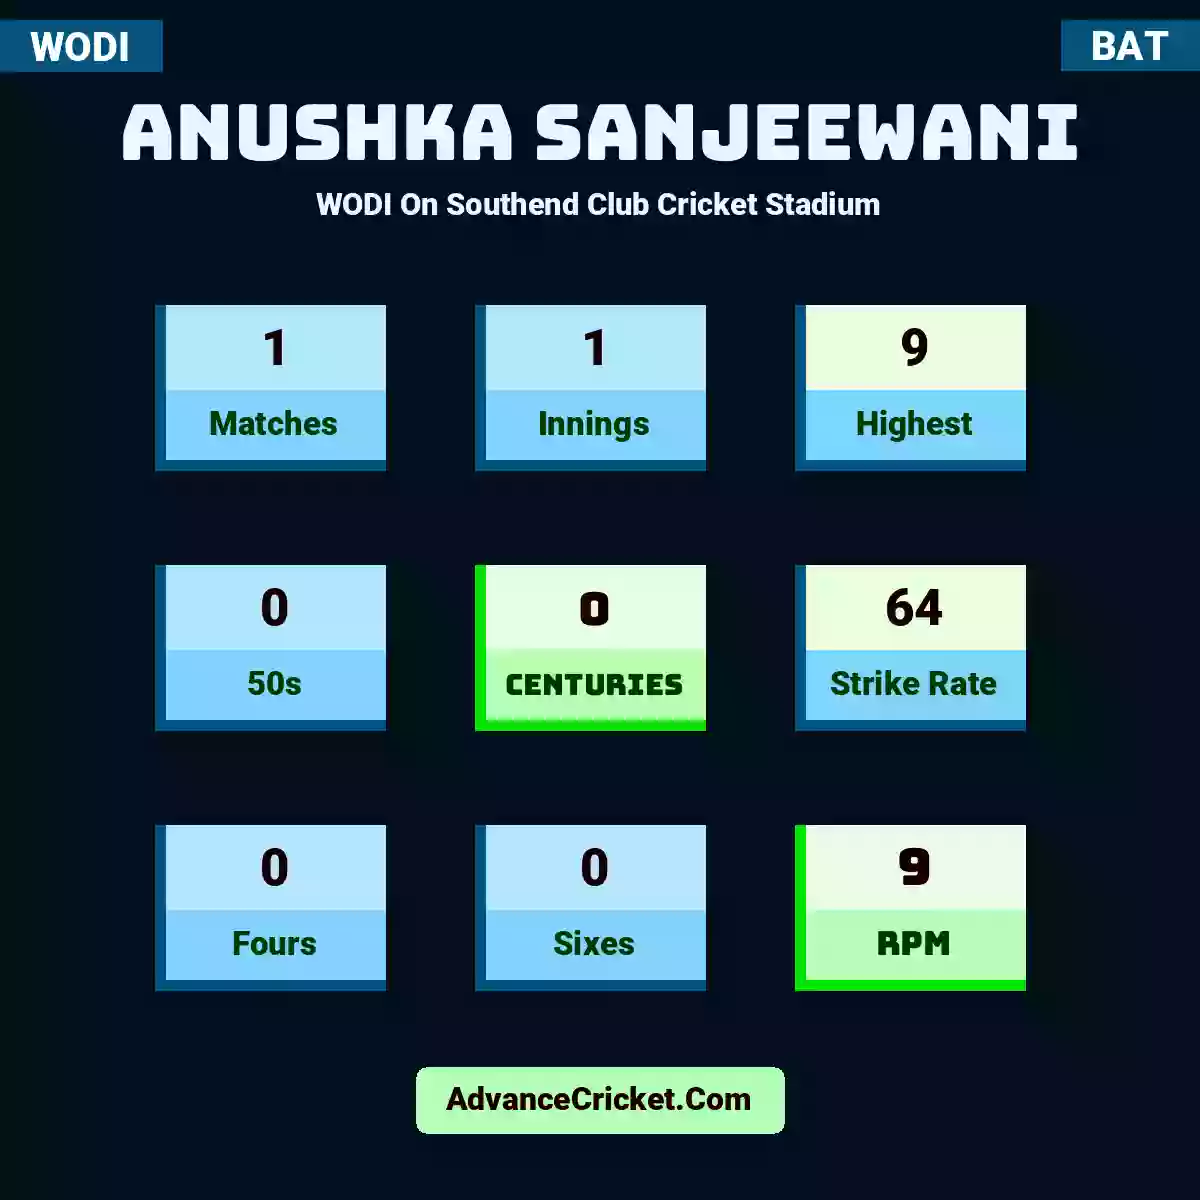 Anushka Sanjeewani WODI  On Southend Club Cricket Stadium, Anushka Sanjeewani played 1 matches, scored 9 runs as highest, 0 half-centuries, and 0 centuries, with a strike rate of 64. A.Sanjeewani hit 0 fours and 0 sixes, with an RPM of 9.